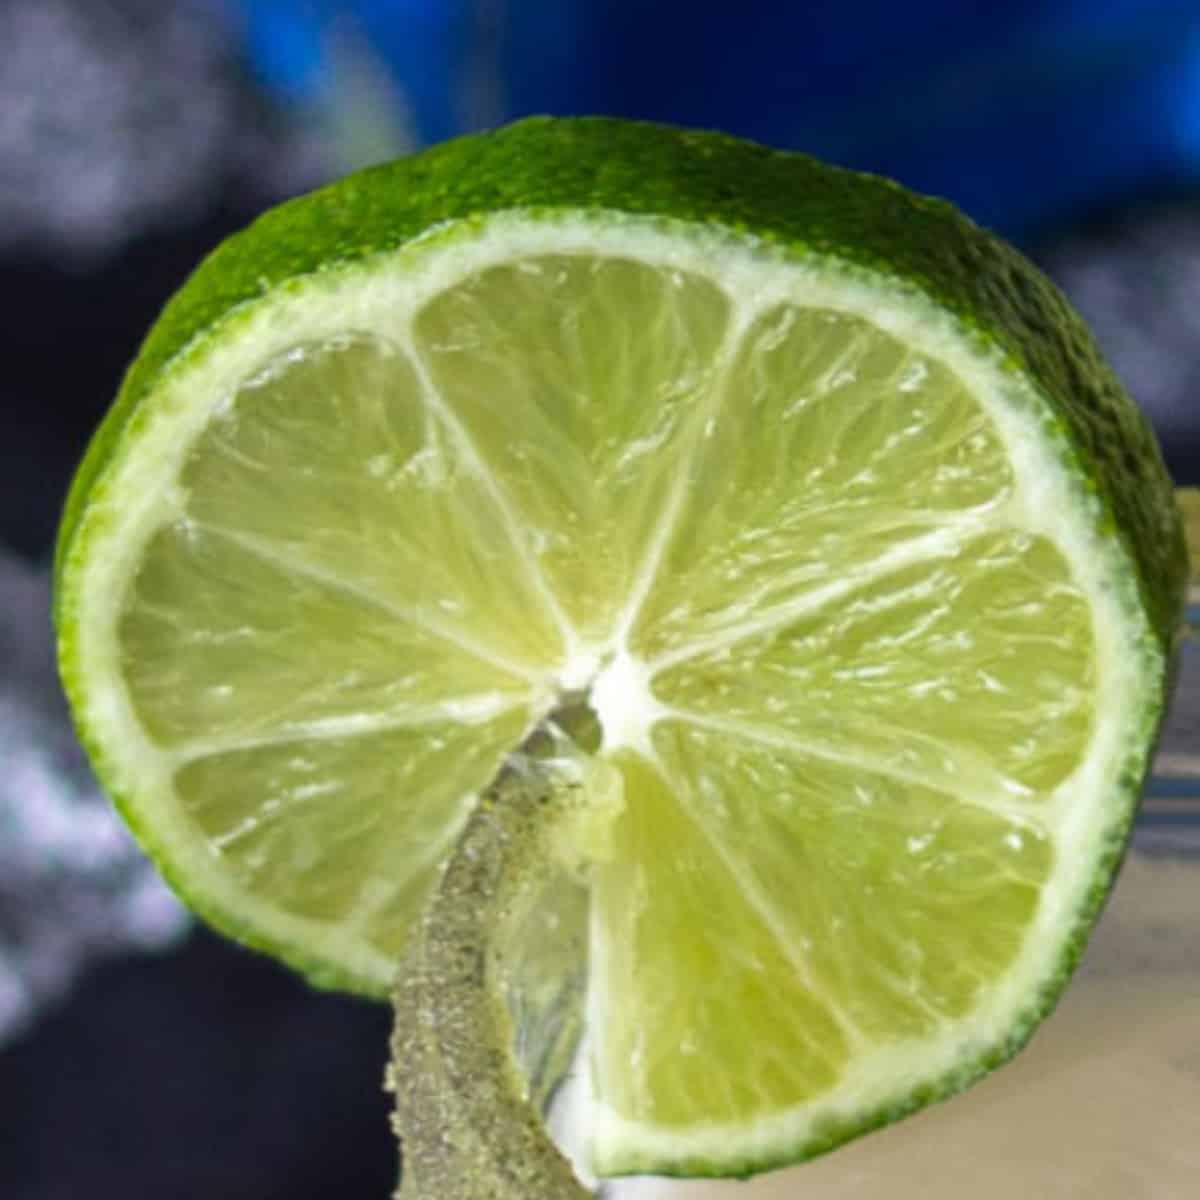 Lime slice on a glass edge.